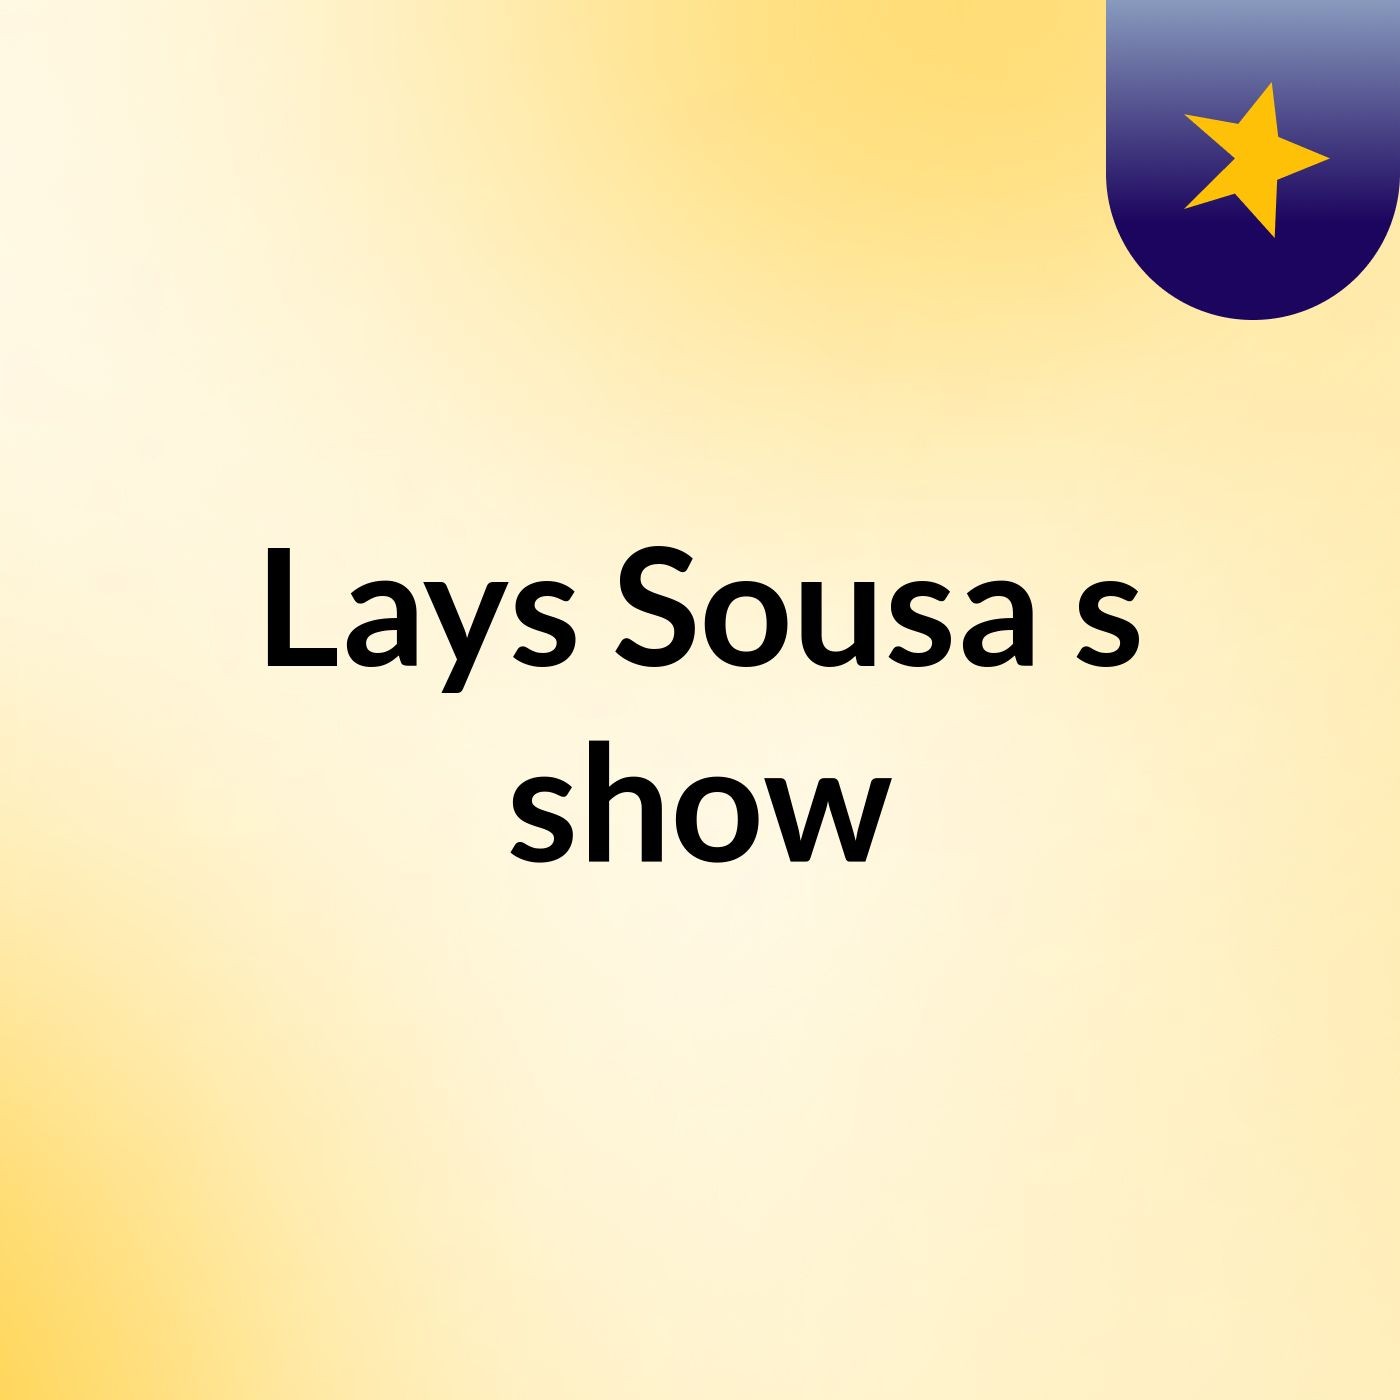 Lays Sousa's show